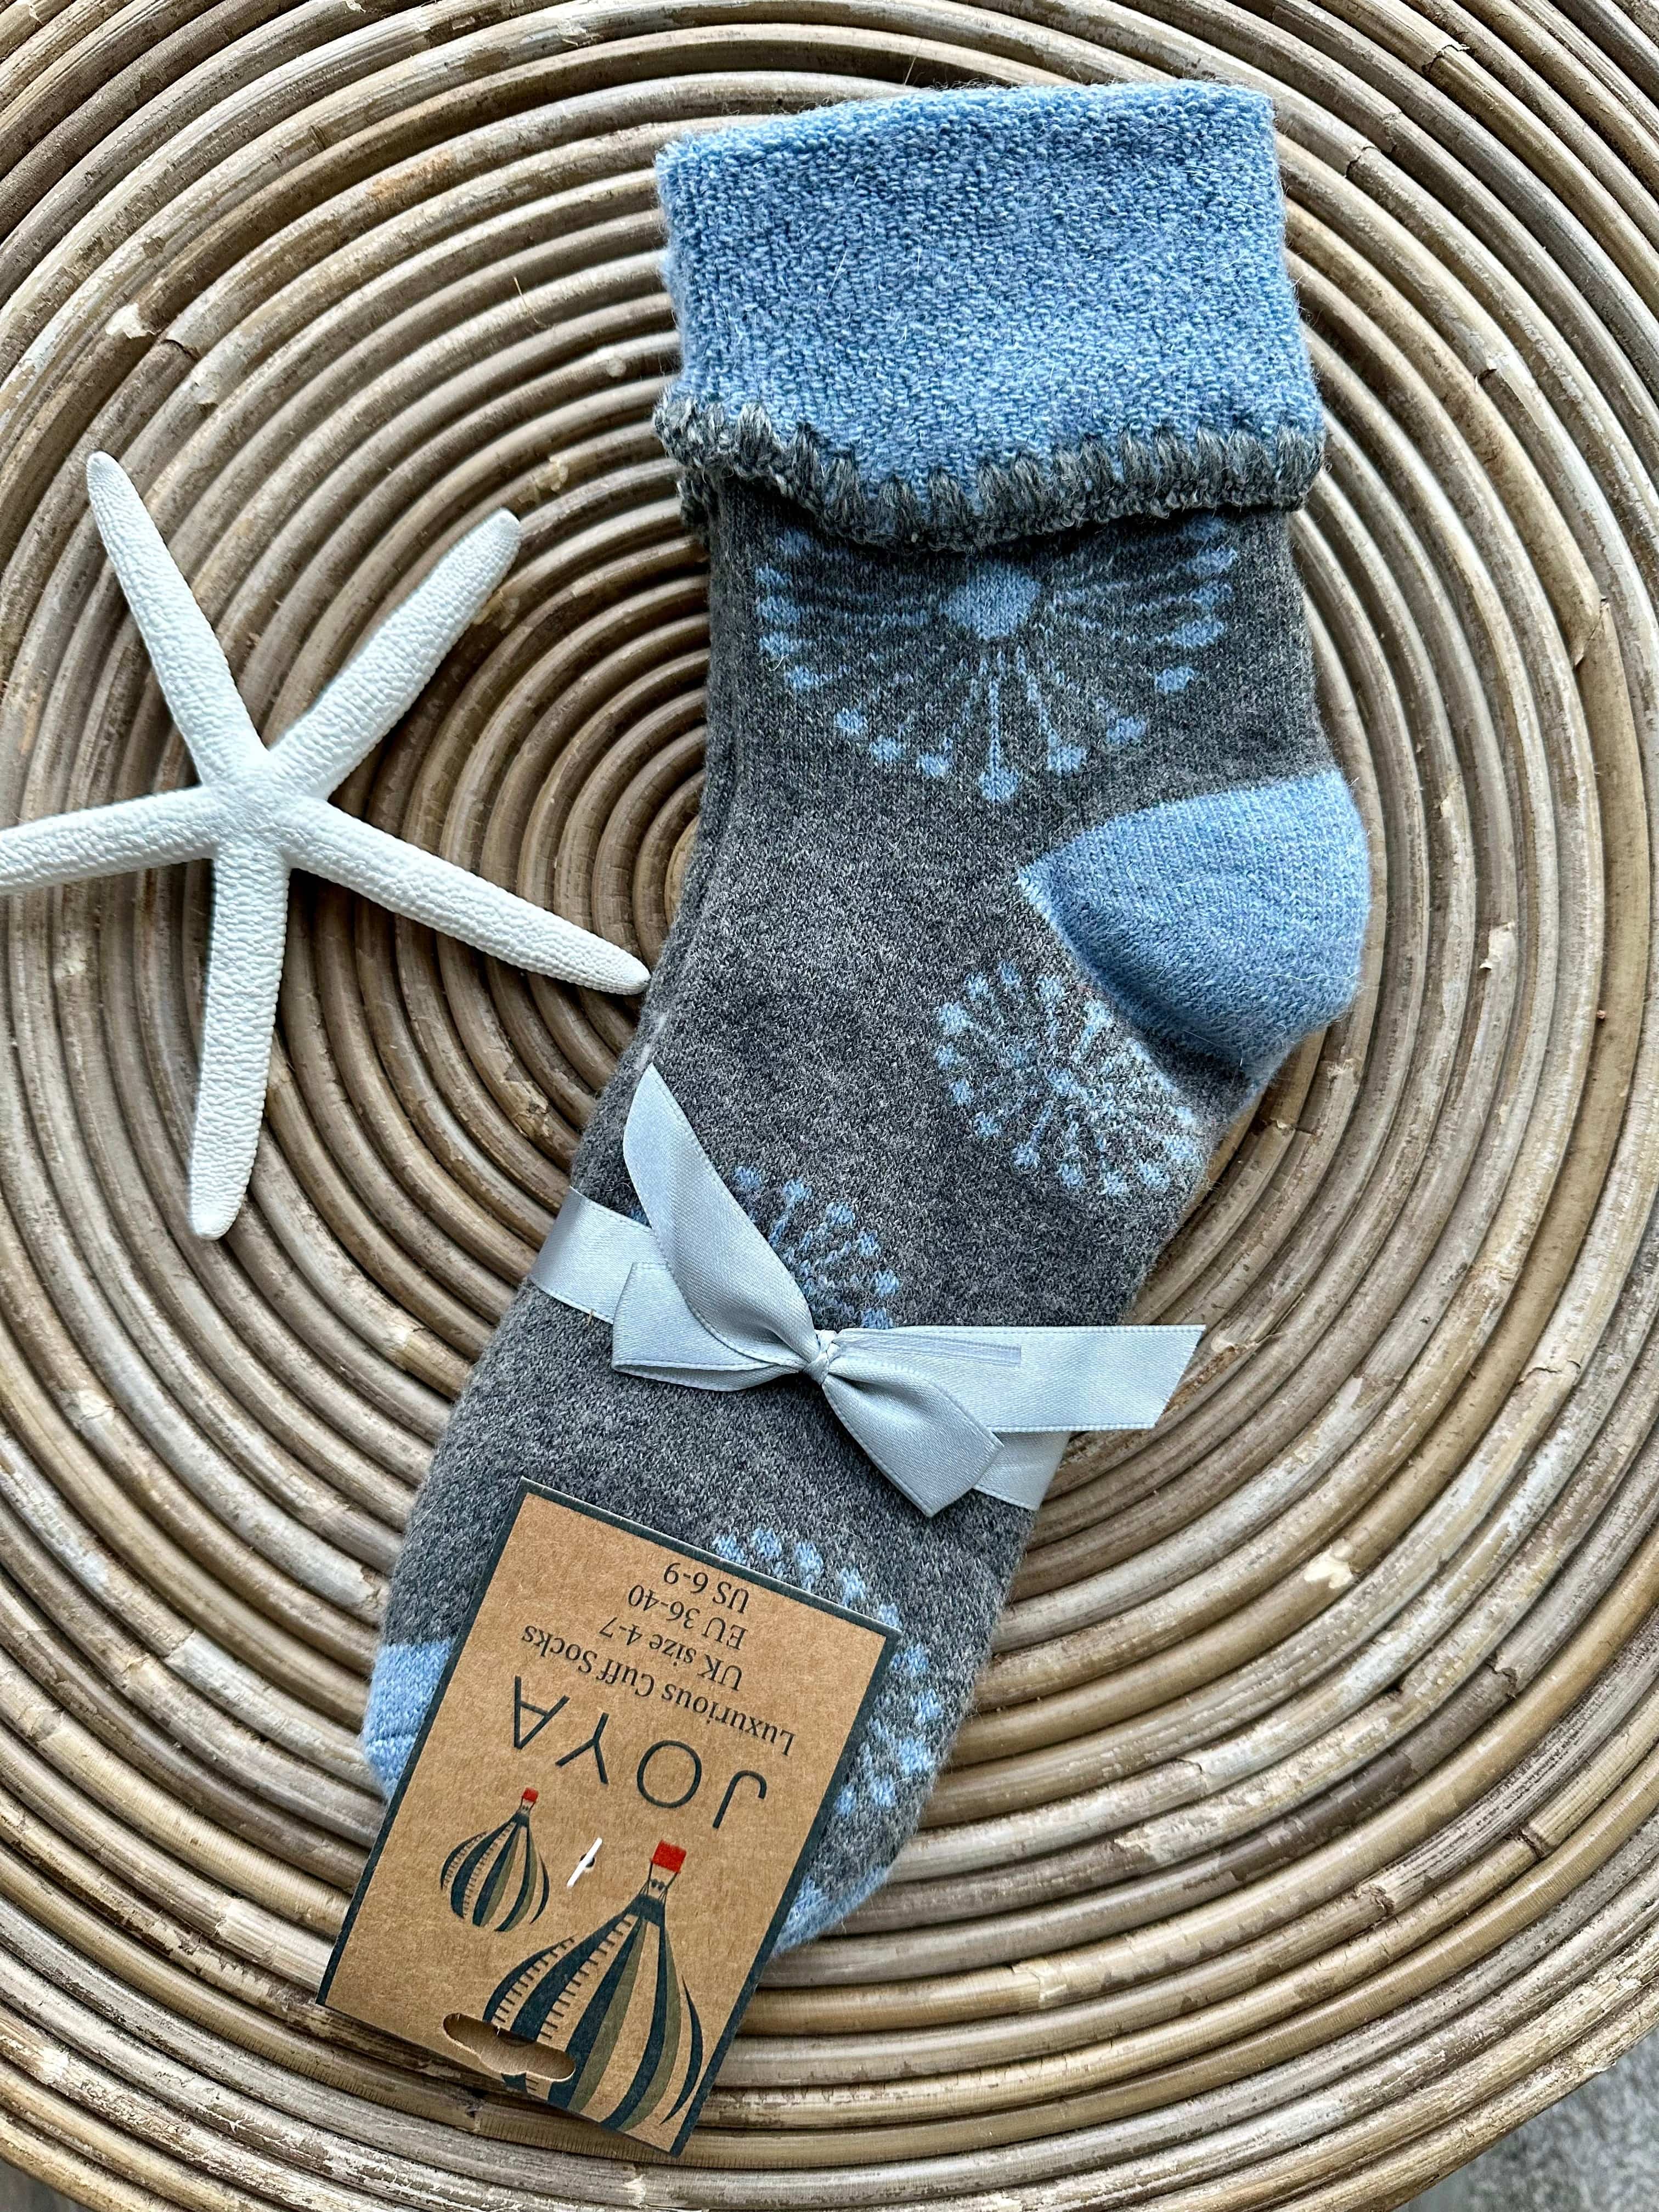 lusciousscarves Joya Ladies Blue and Grey Wool Blend Cuff Socks with Dandelion Clocks Design .